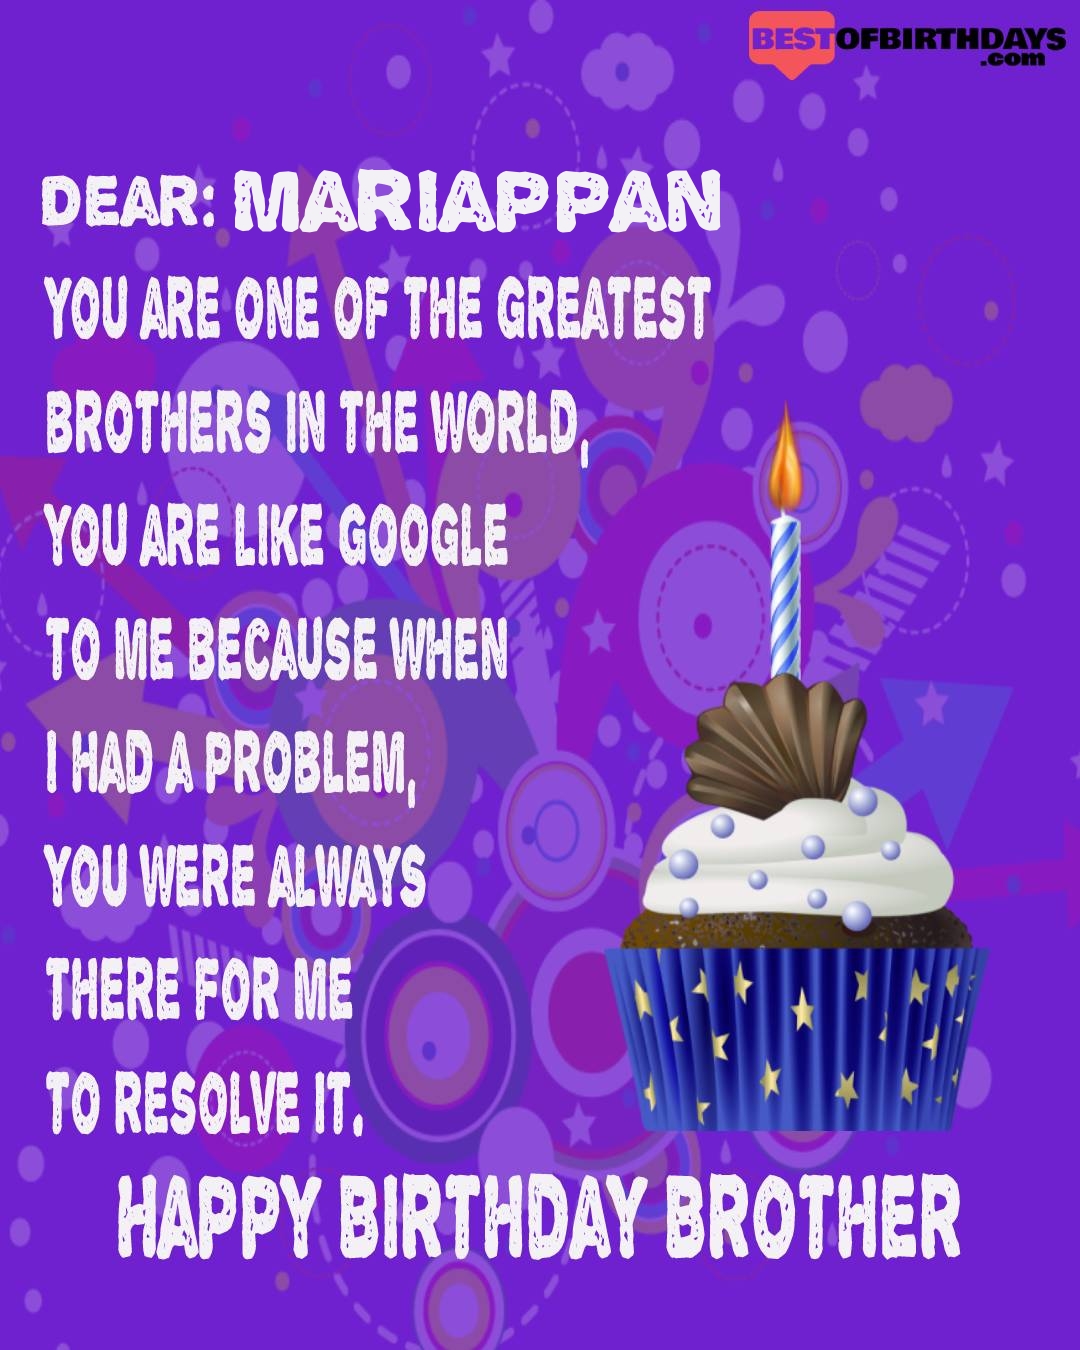 Happy birthday mariappan bhai brother bro